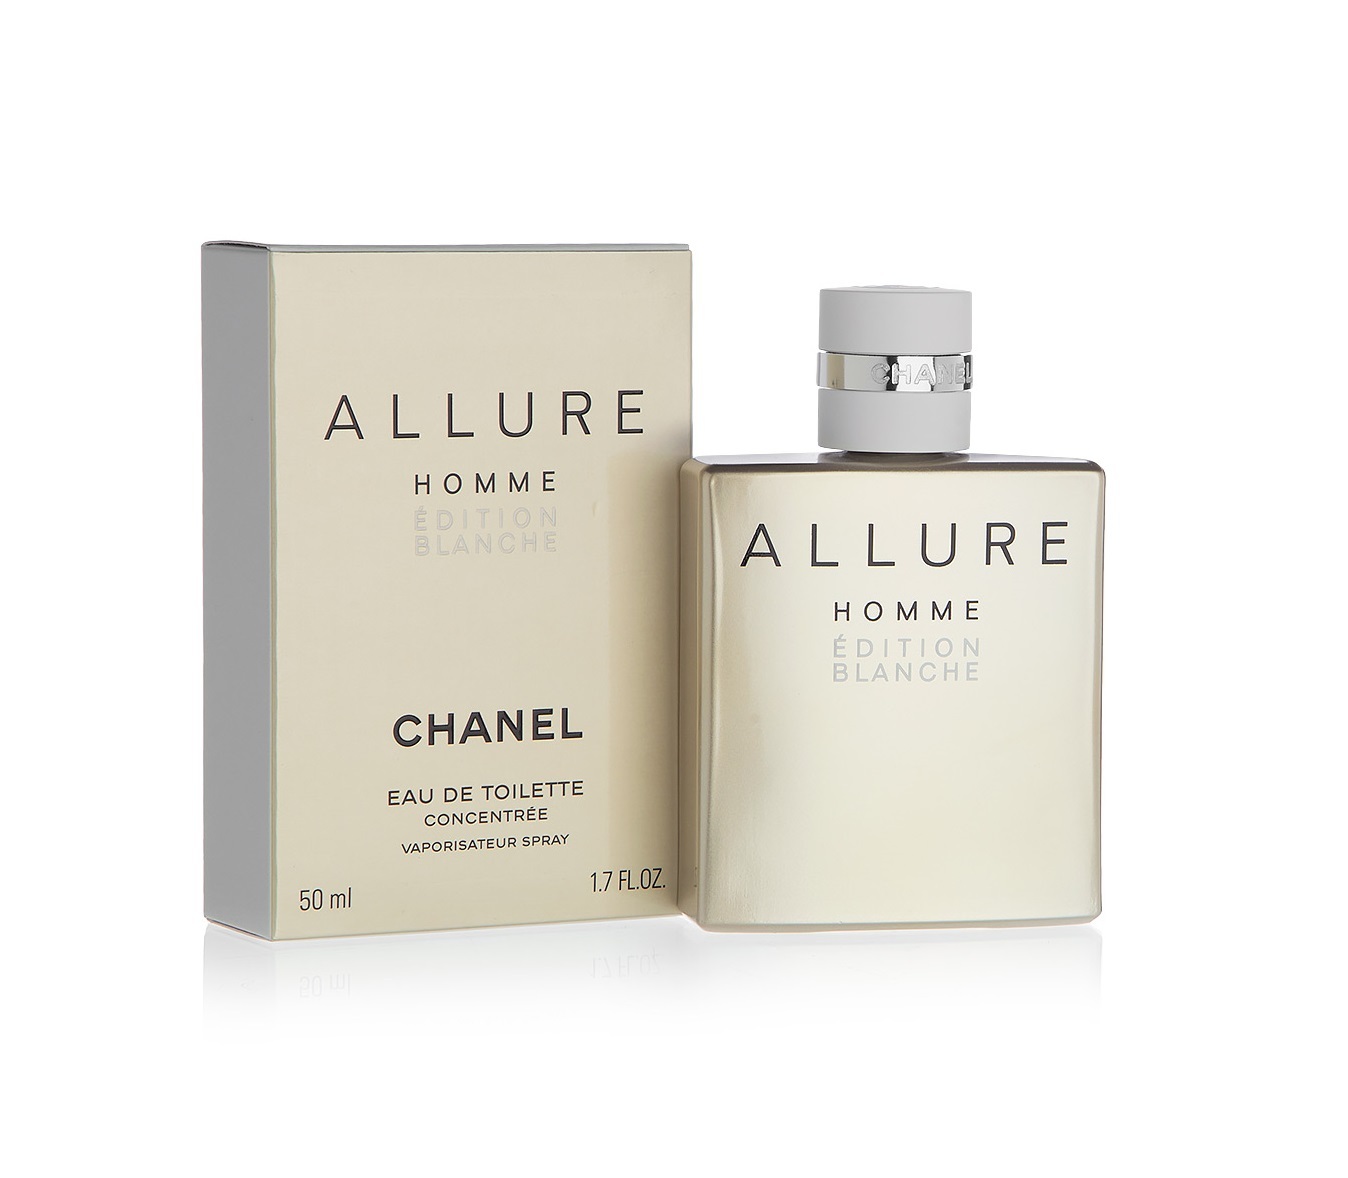 Chanel homme edition. Chanel Allure homme Edition Blanche EDP 100ml. Chanel Allure 100ml (m). Парфюмерная вода мужская Chanel Allure homme Edition Blanche. Мужская туалетная вода Шанель Аллюр.